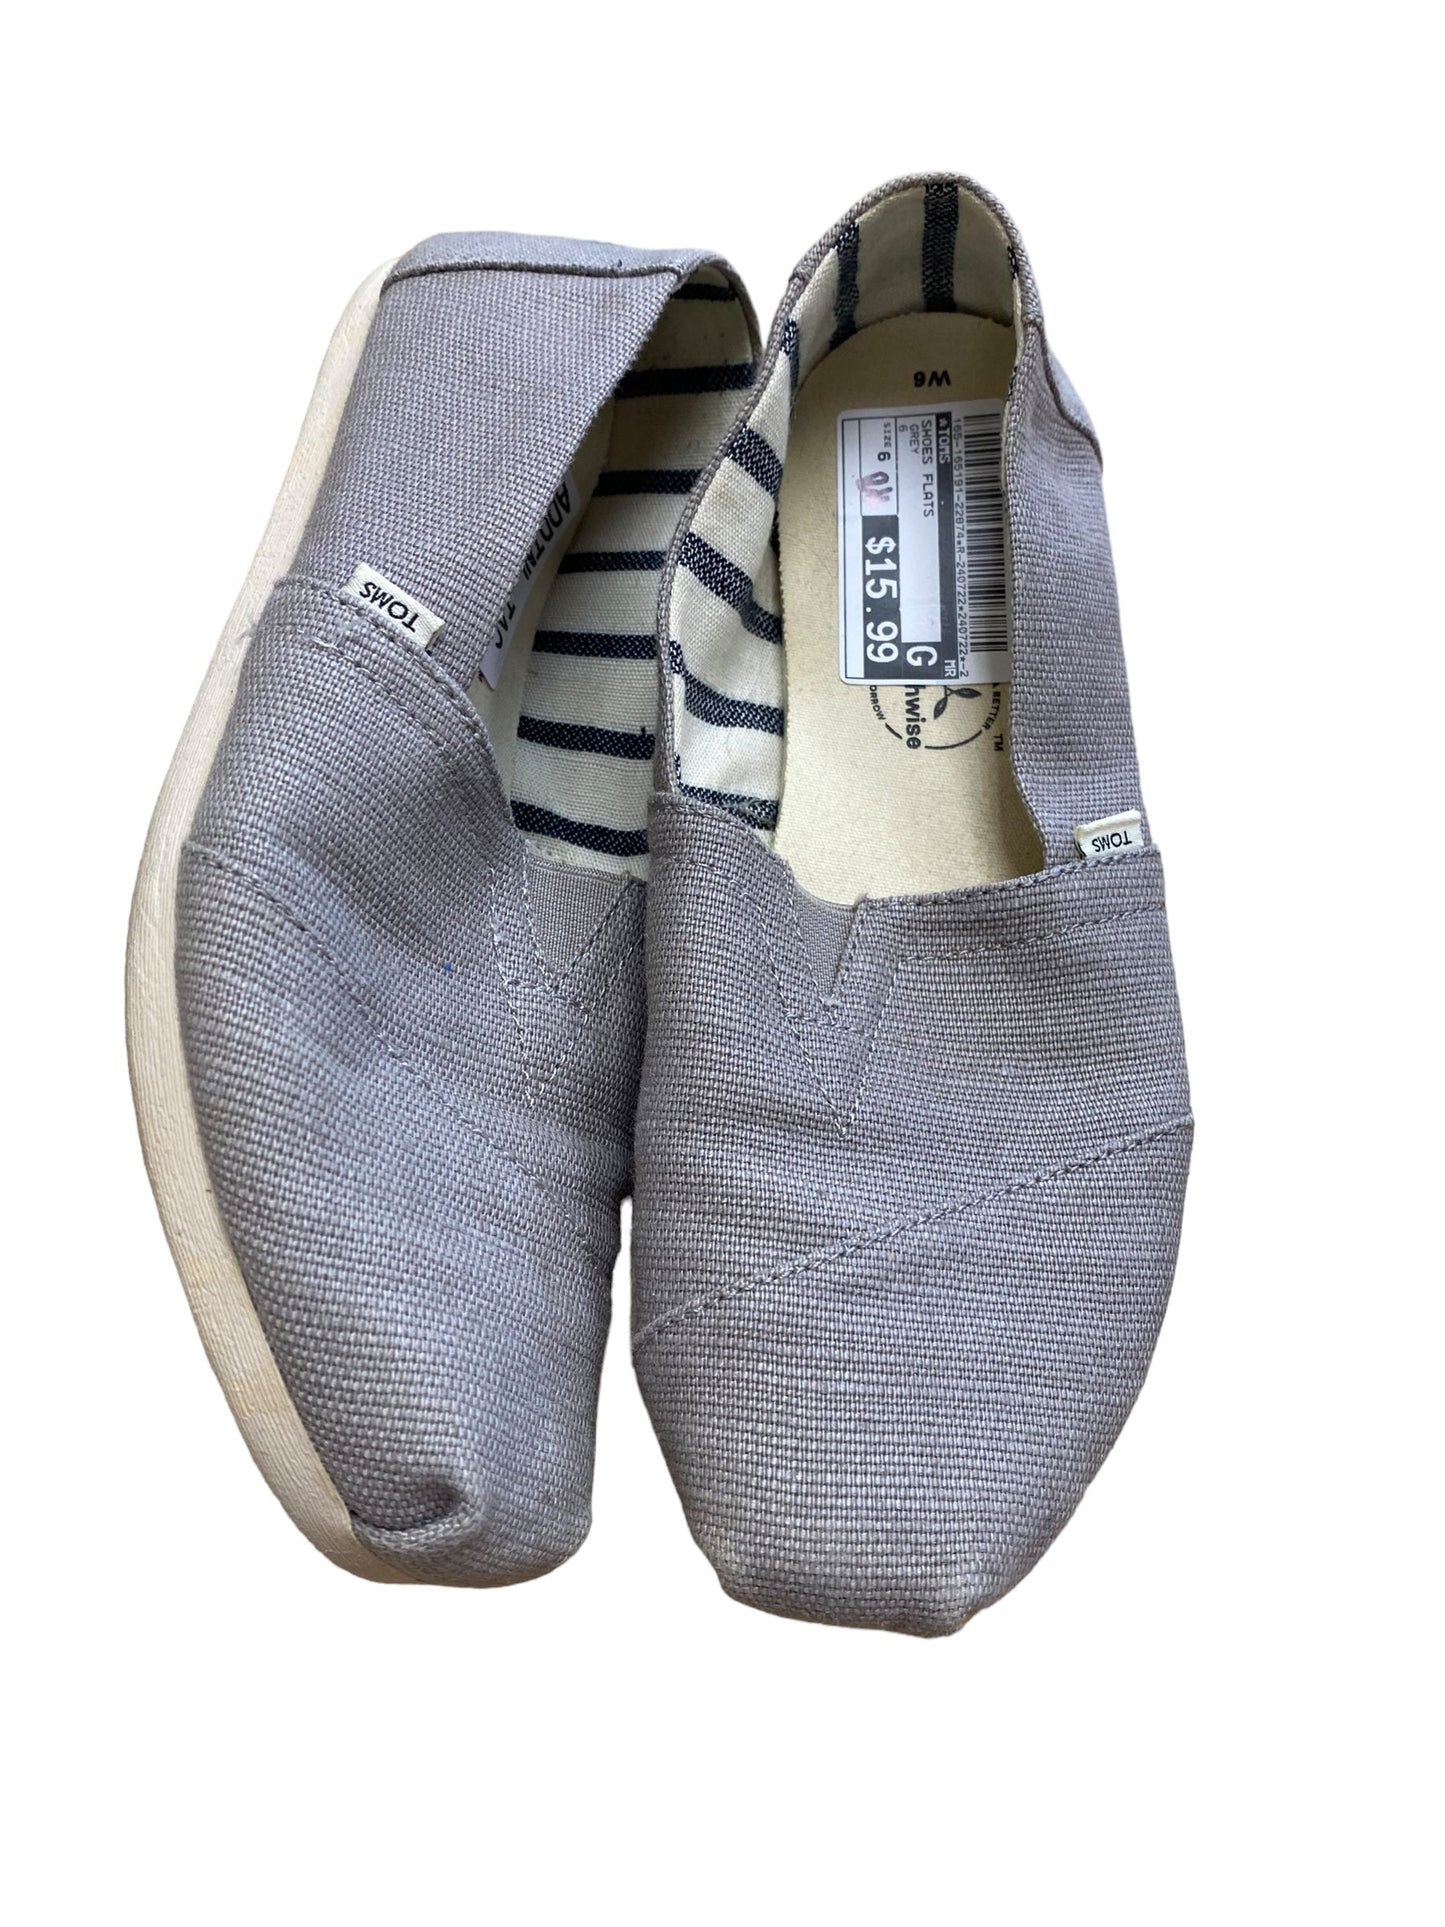 Grey Shoes Flats Toms, Size 6